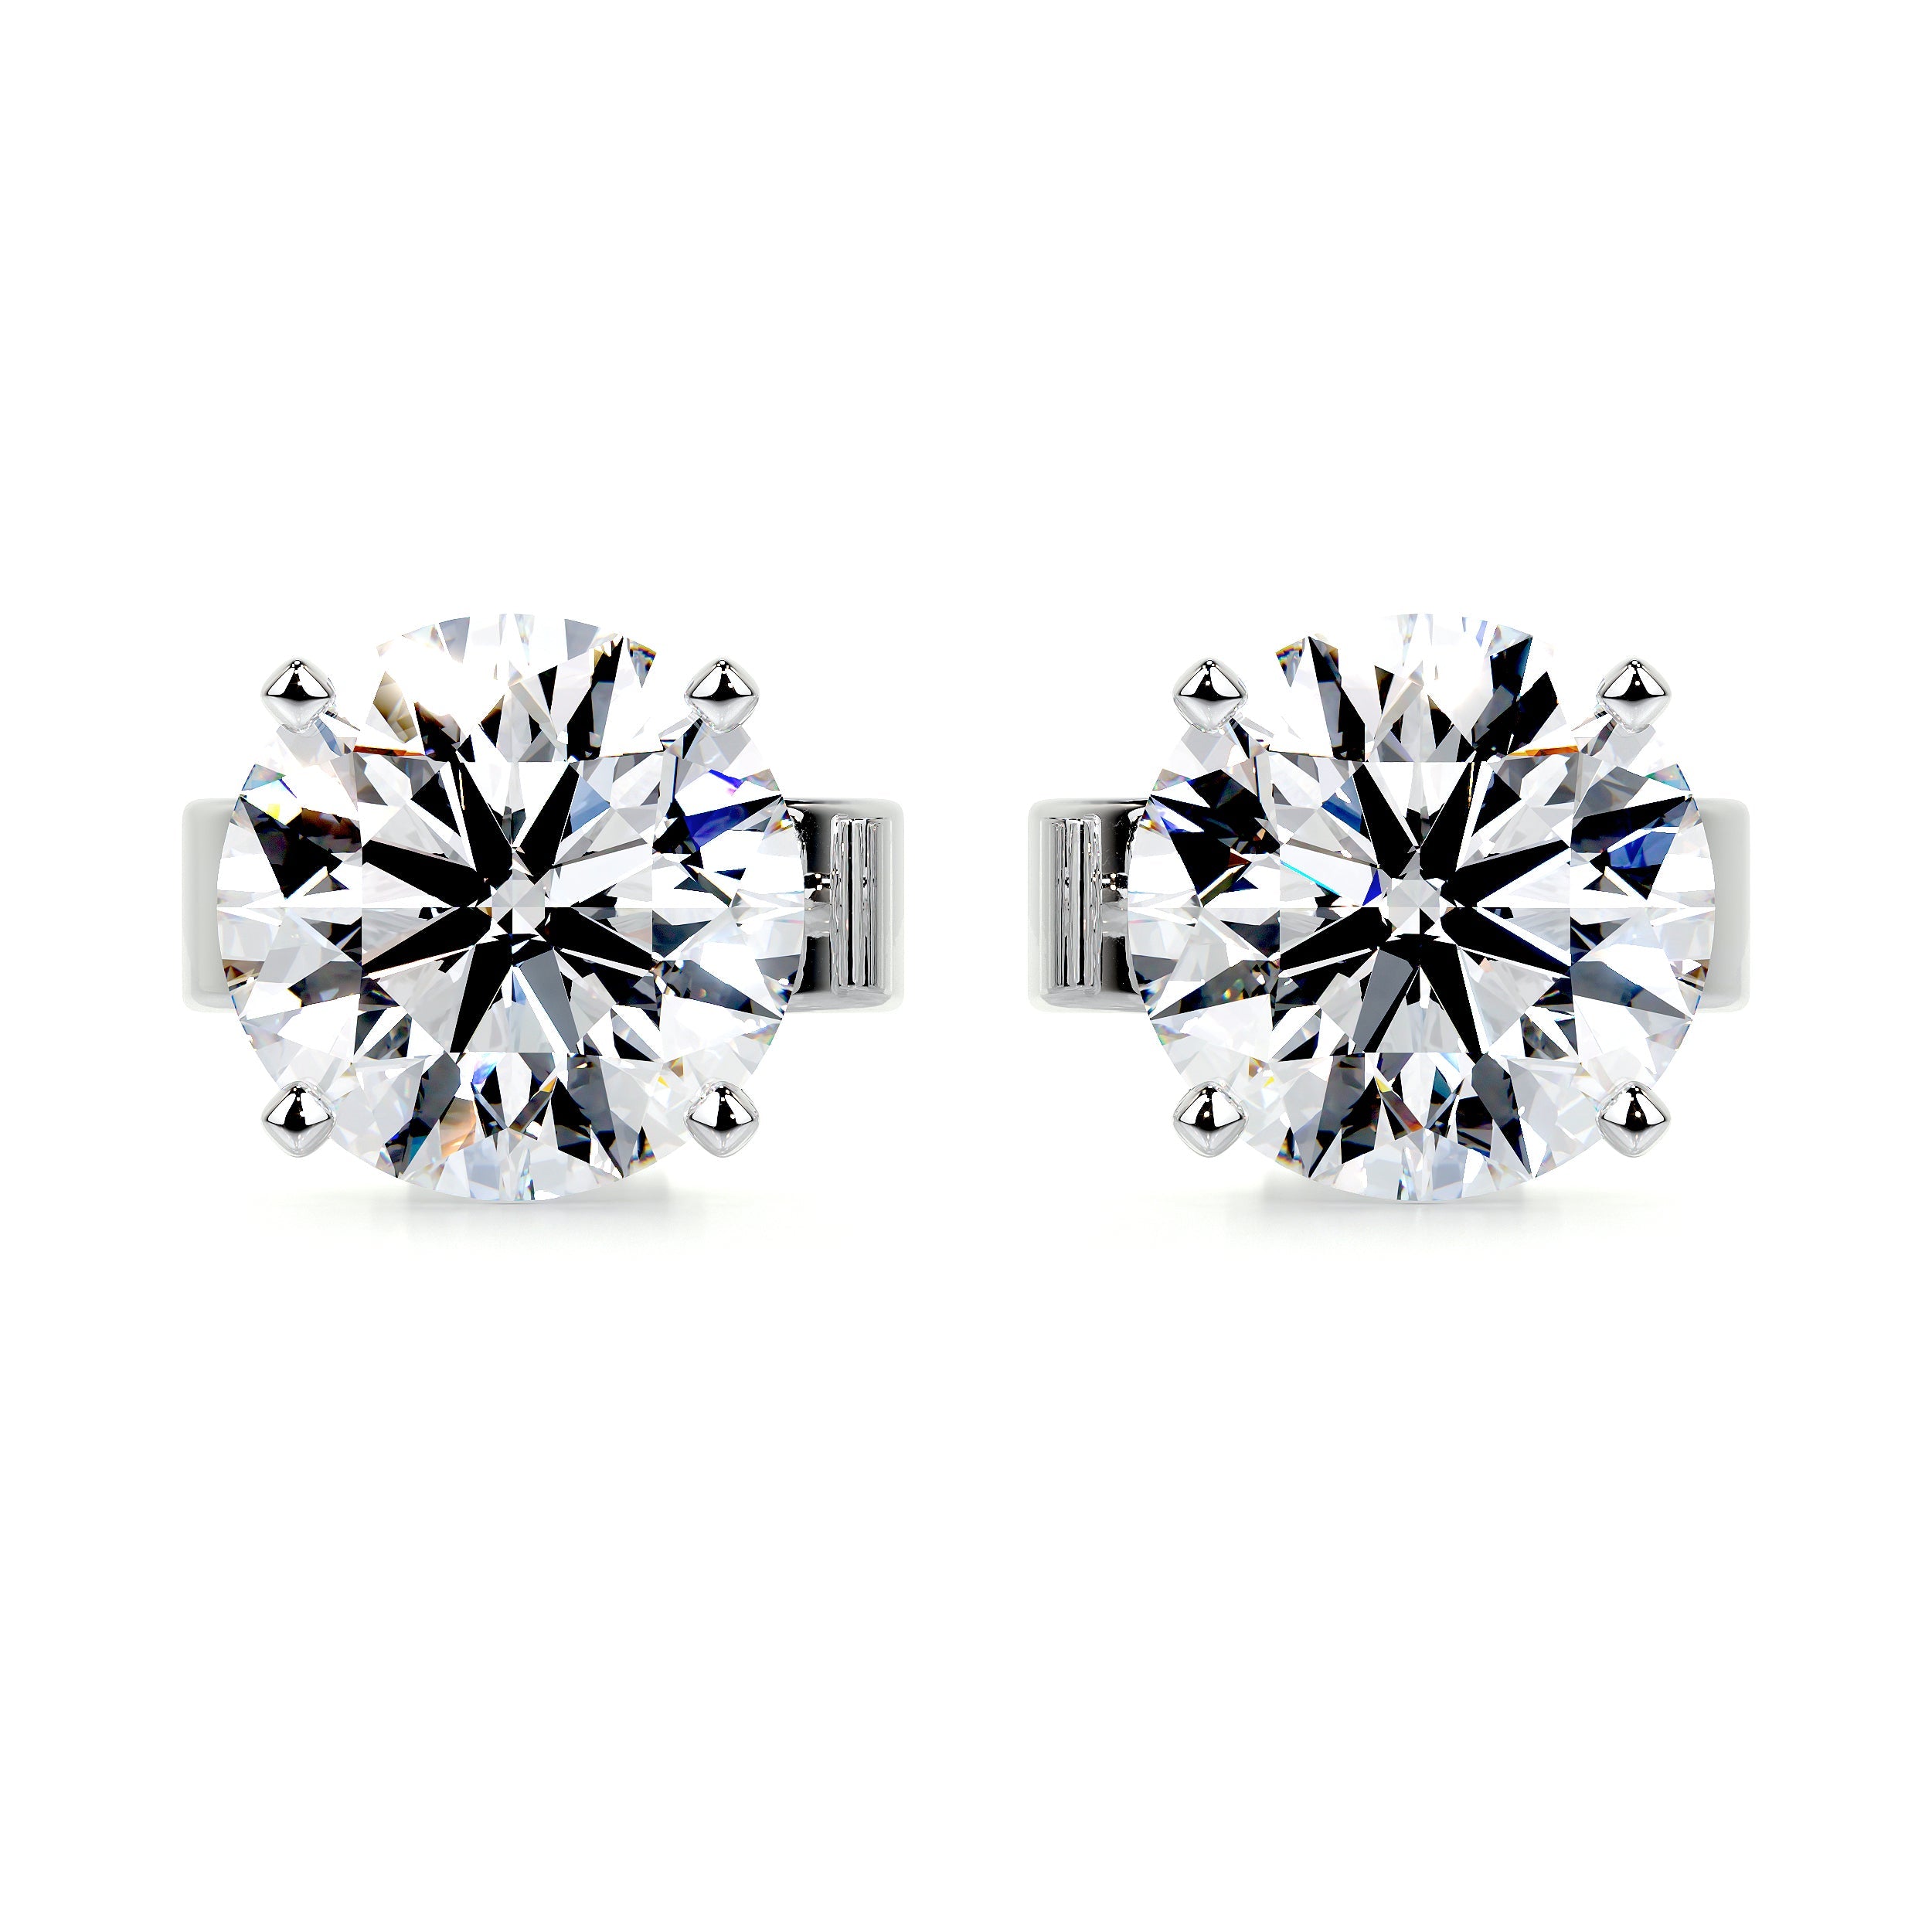 Allen Lab Grown Diamond Earrings   (6 Carat) -14K White Gold